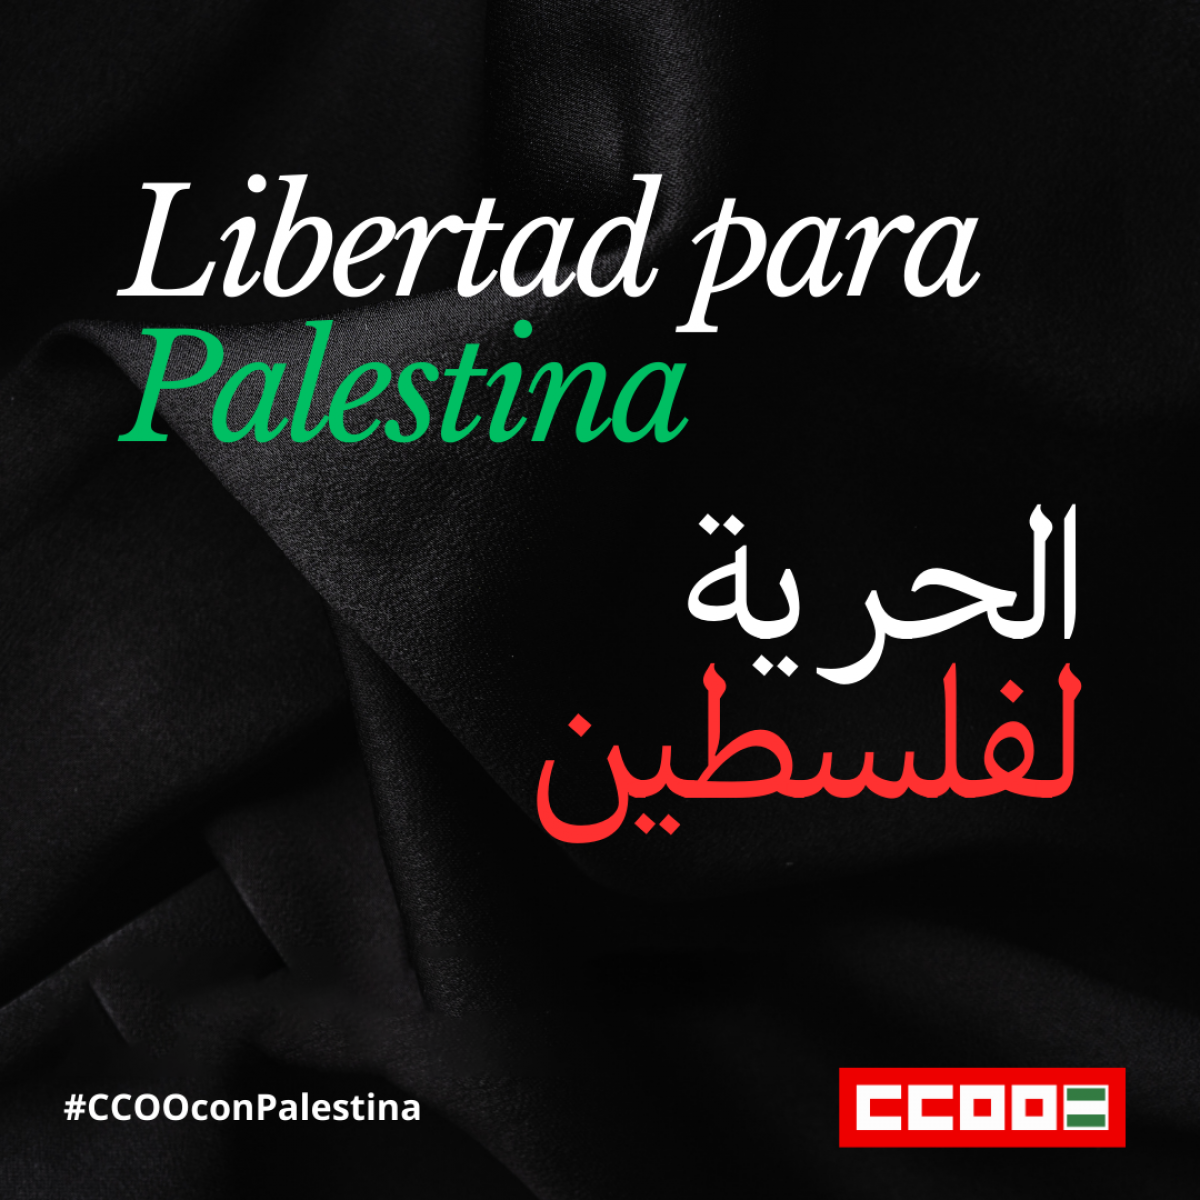 CCOO con Palestina